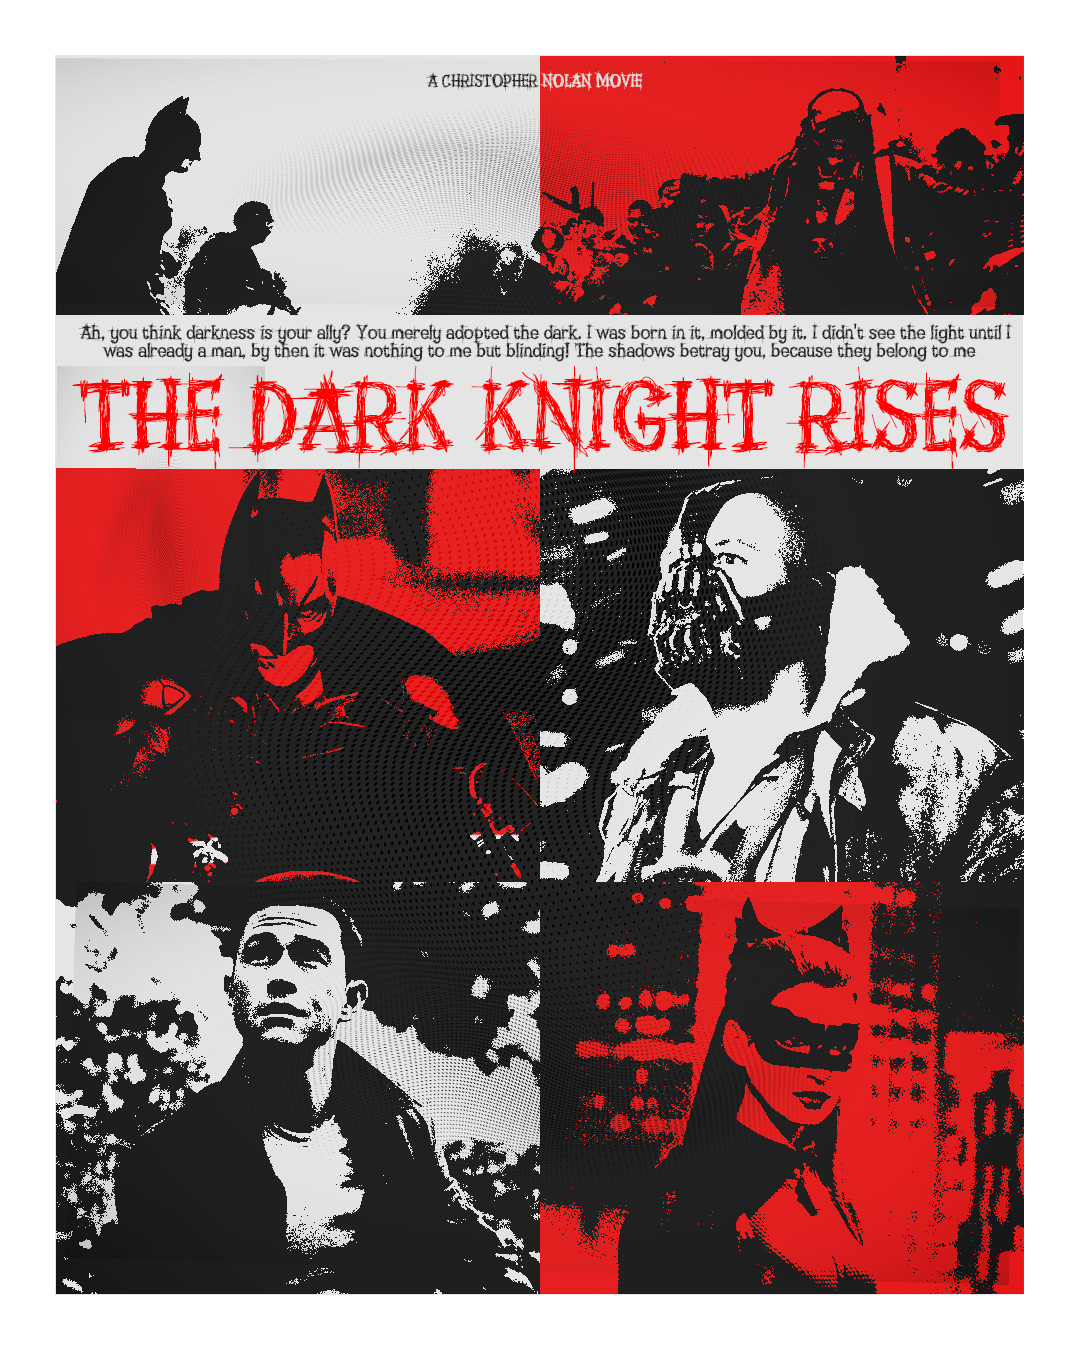 Christopher Nolan Movie Poster Design The Dark Knight Rises